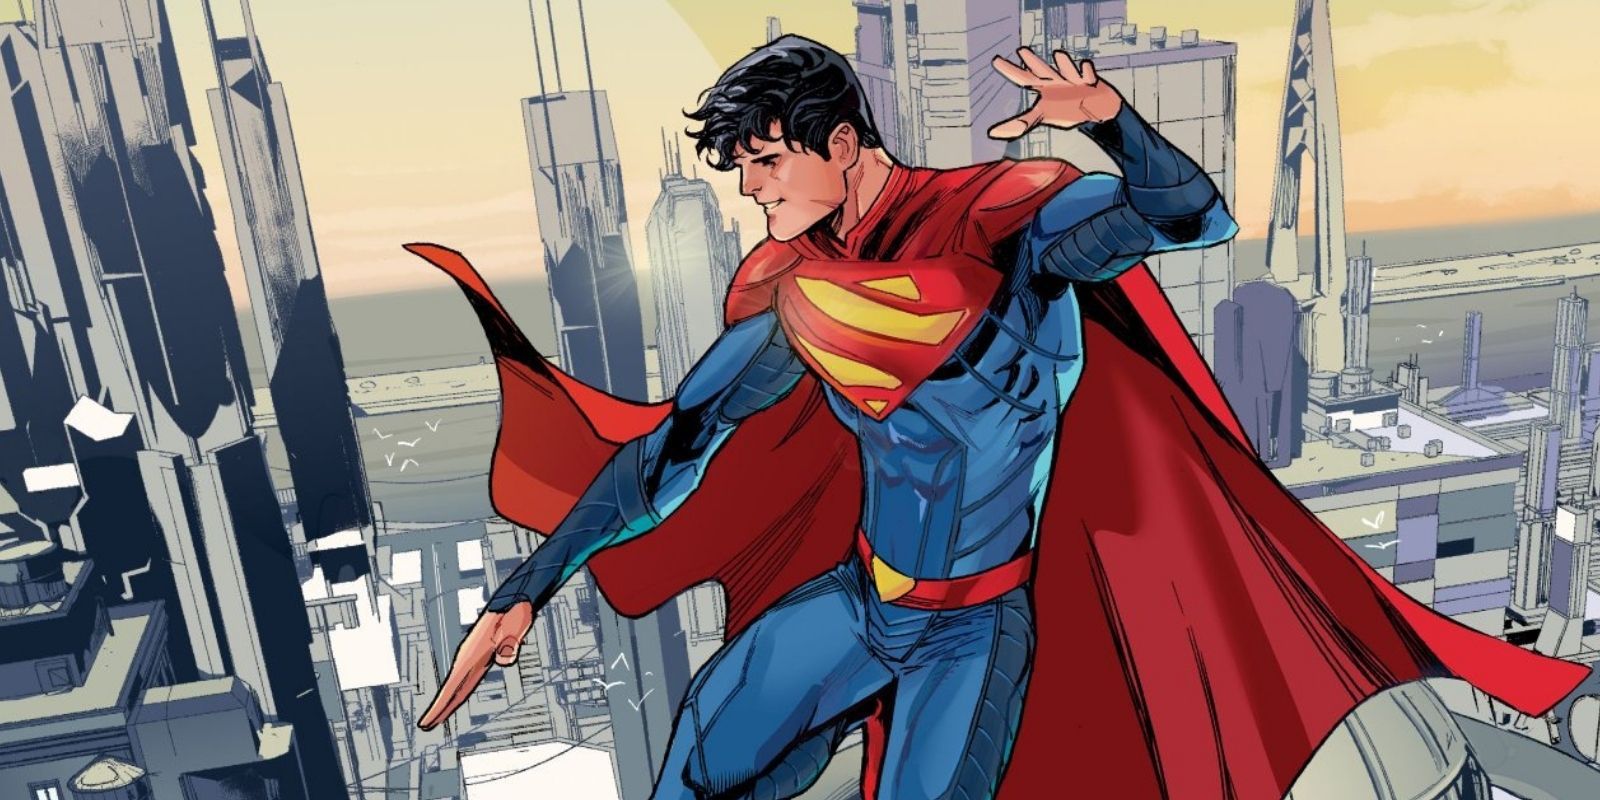 Jon Kent as Superman flying above the city of Metropolis